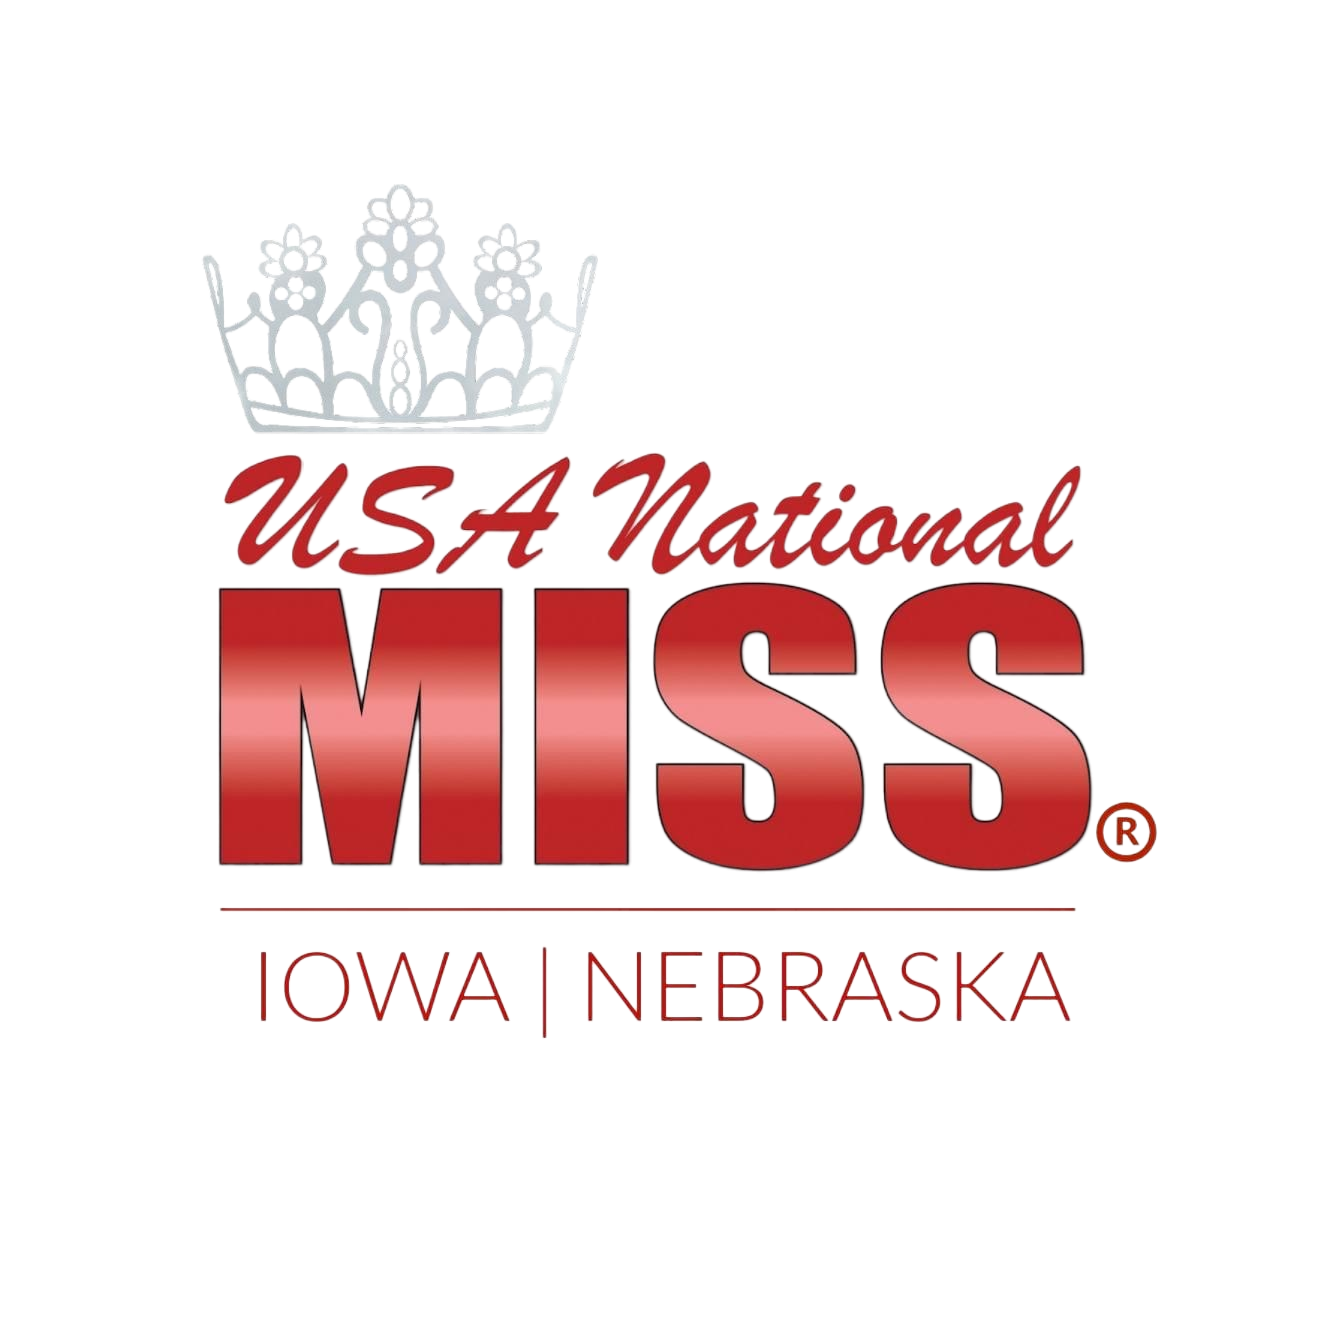 USA National Miss Iowa|Nebraska